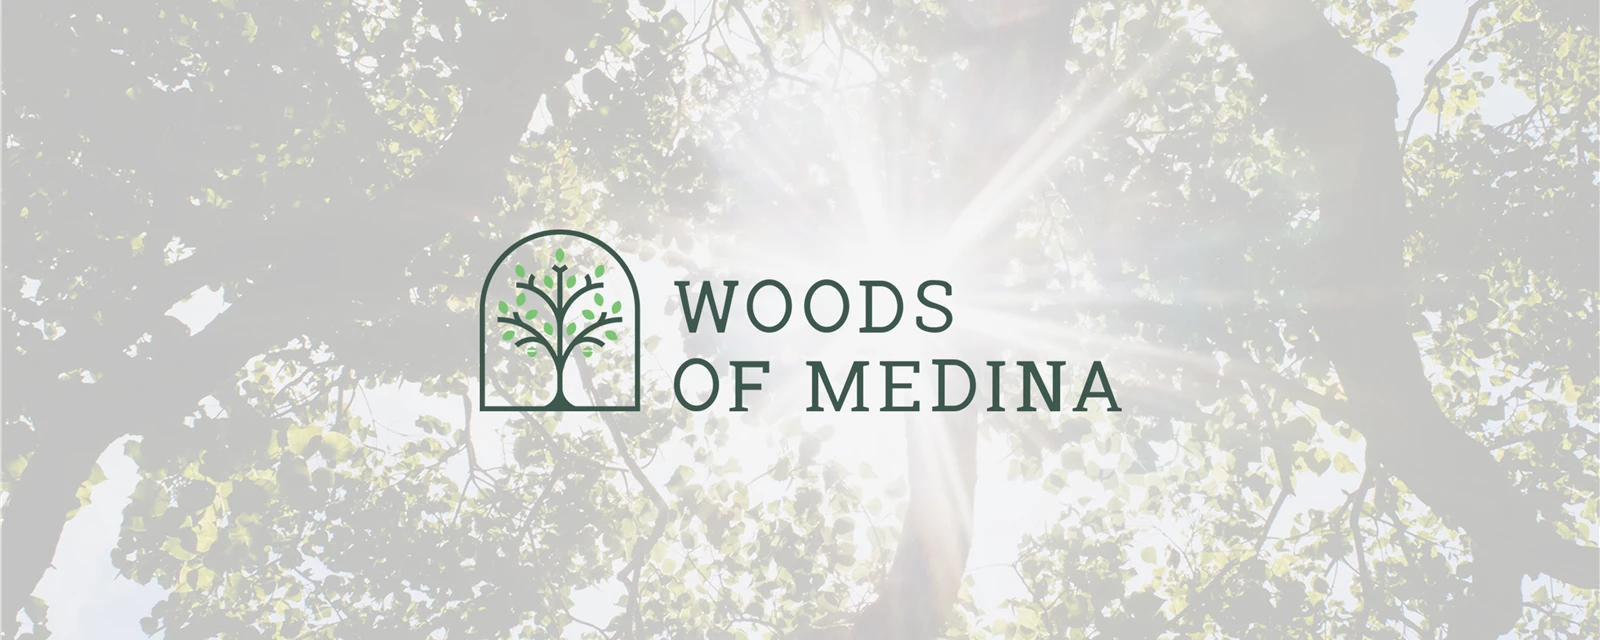 Woods of Medina Cover